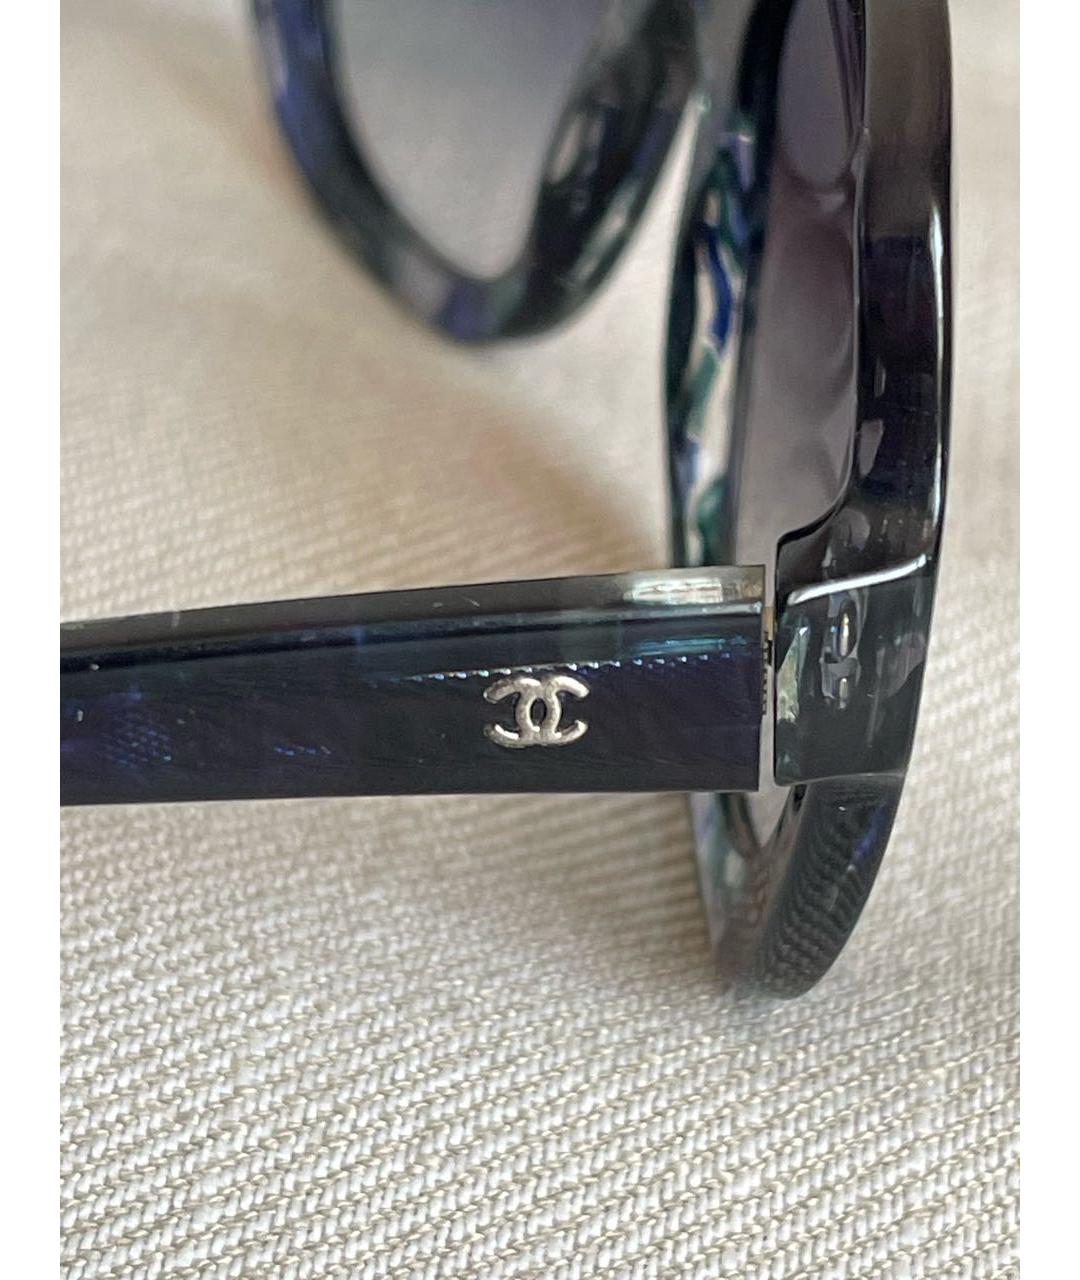 CHANEL Темно-синие пластиковые солнцезащитные очки, фото 3